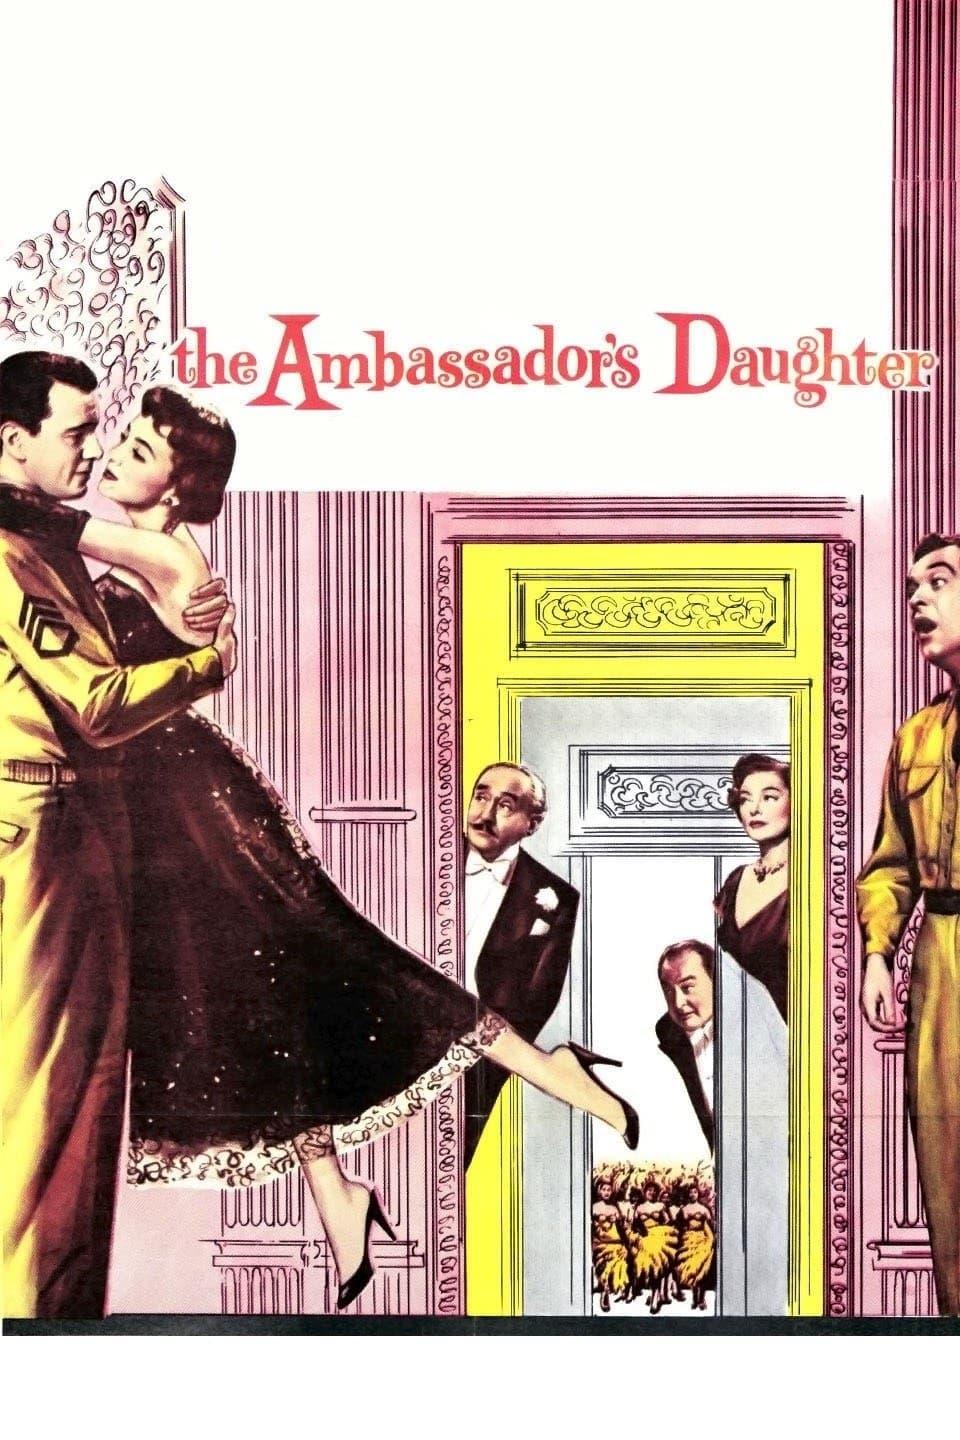 The Ambassador's Daughter poster